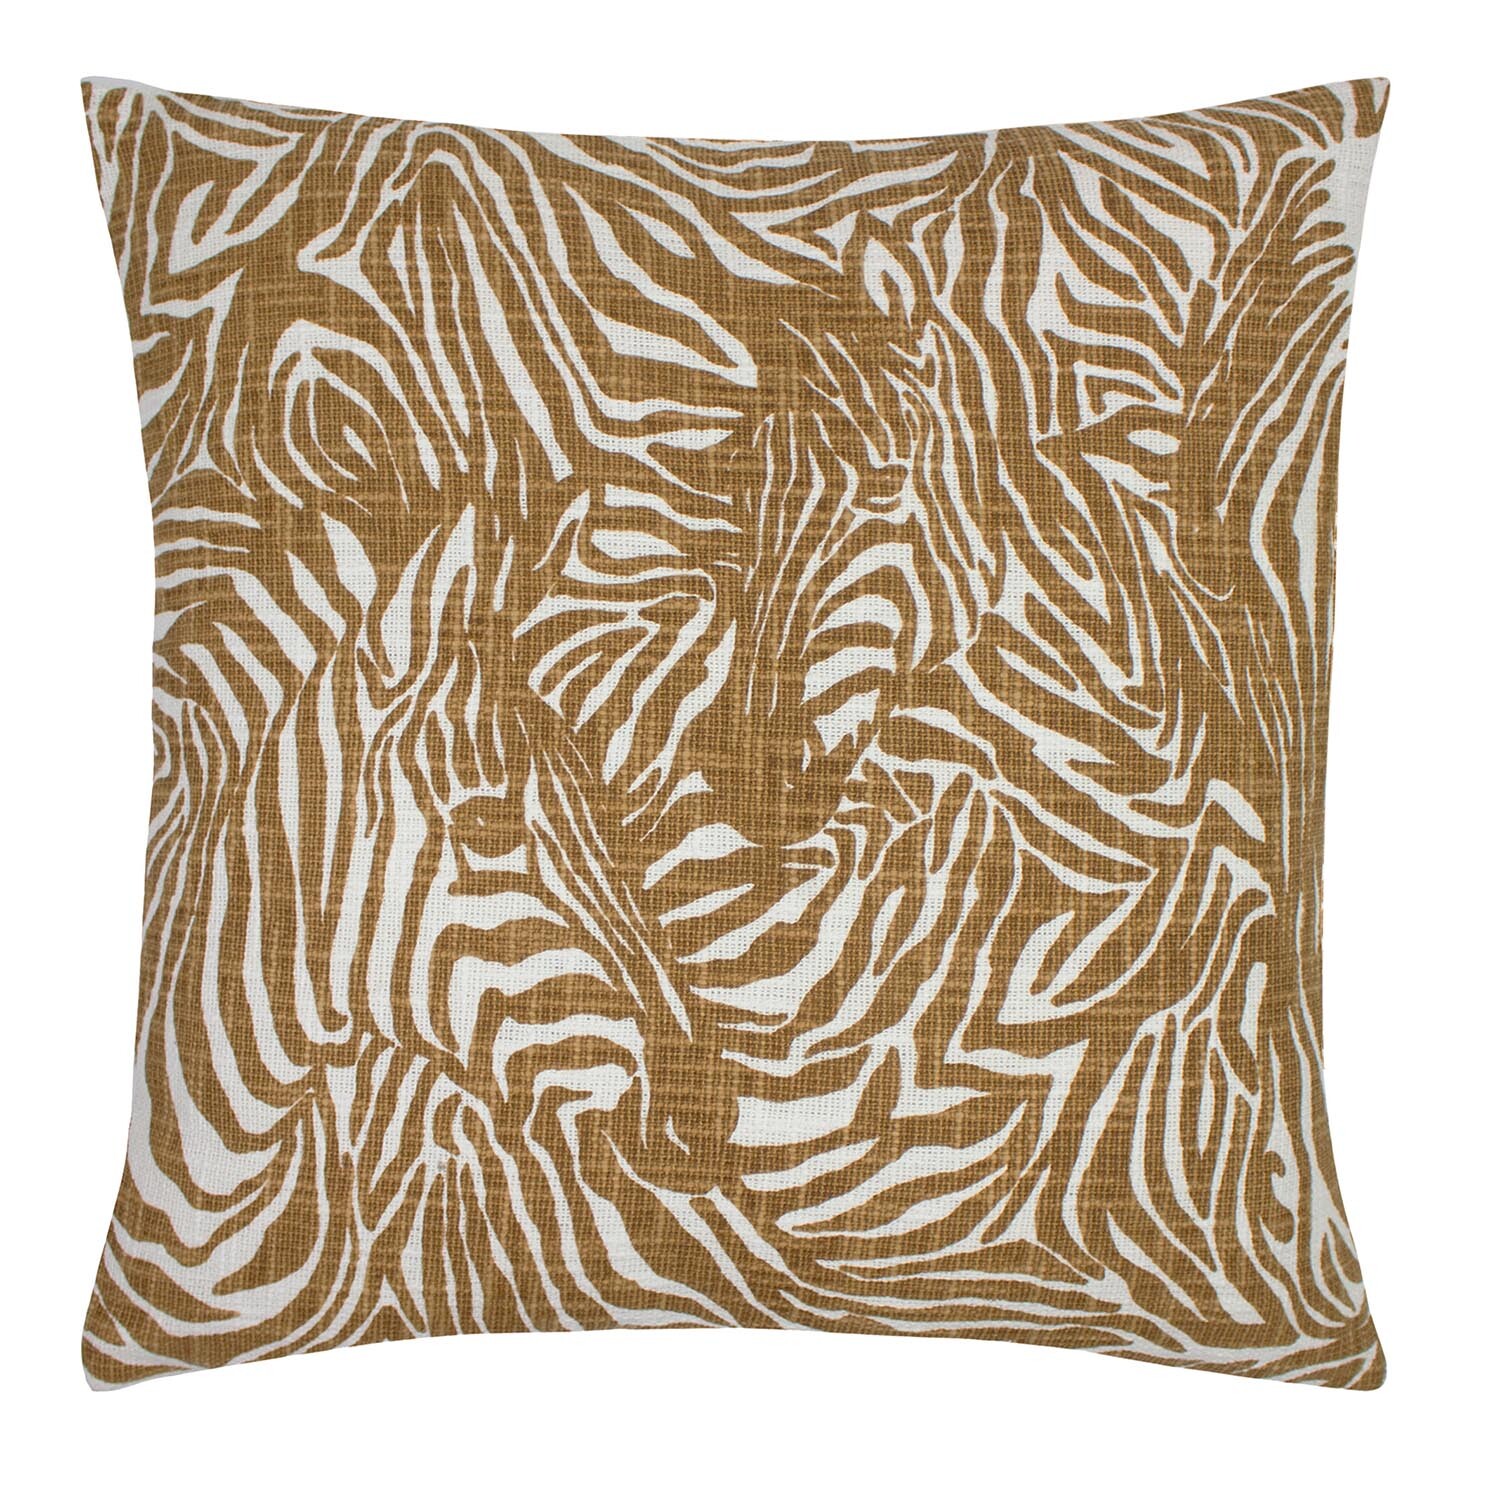 Hidden Zebra Cushion - Caramel Image 1